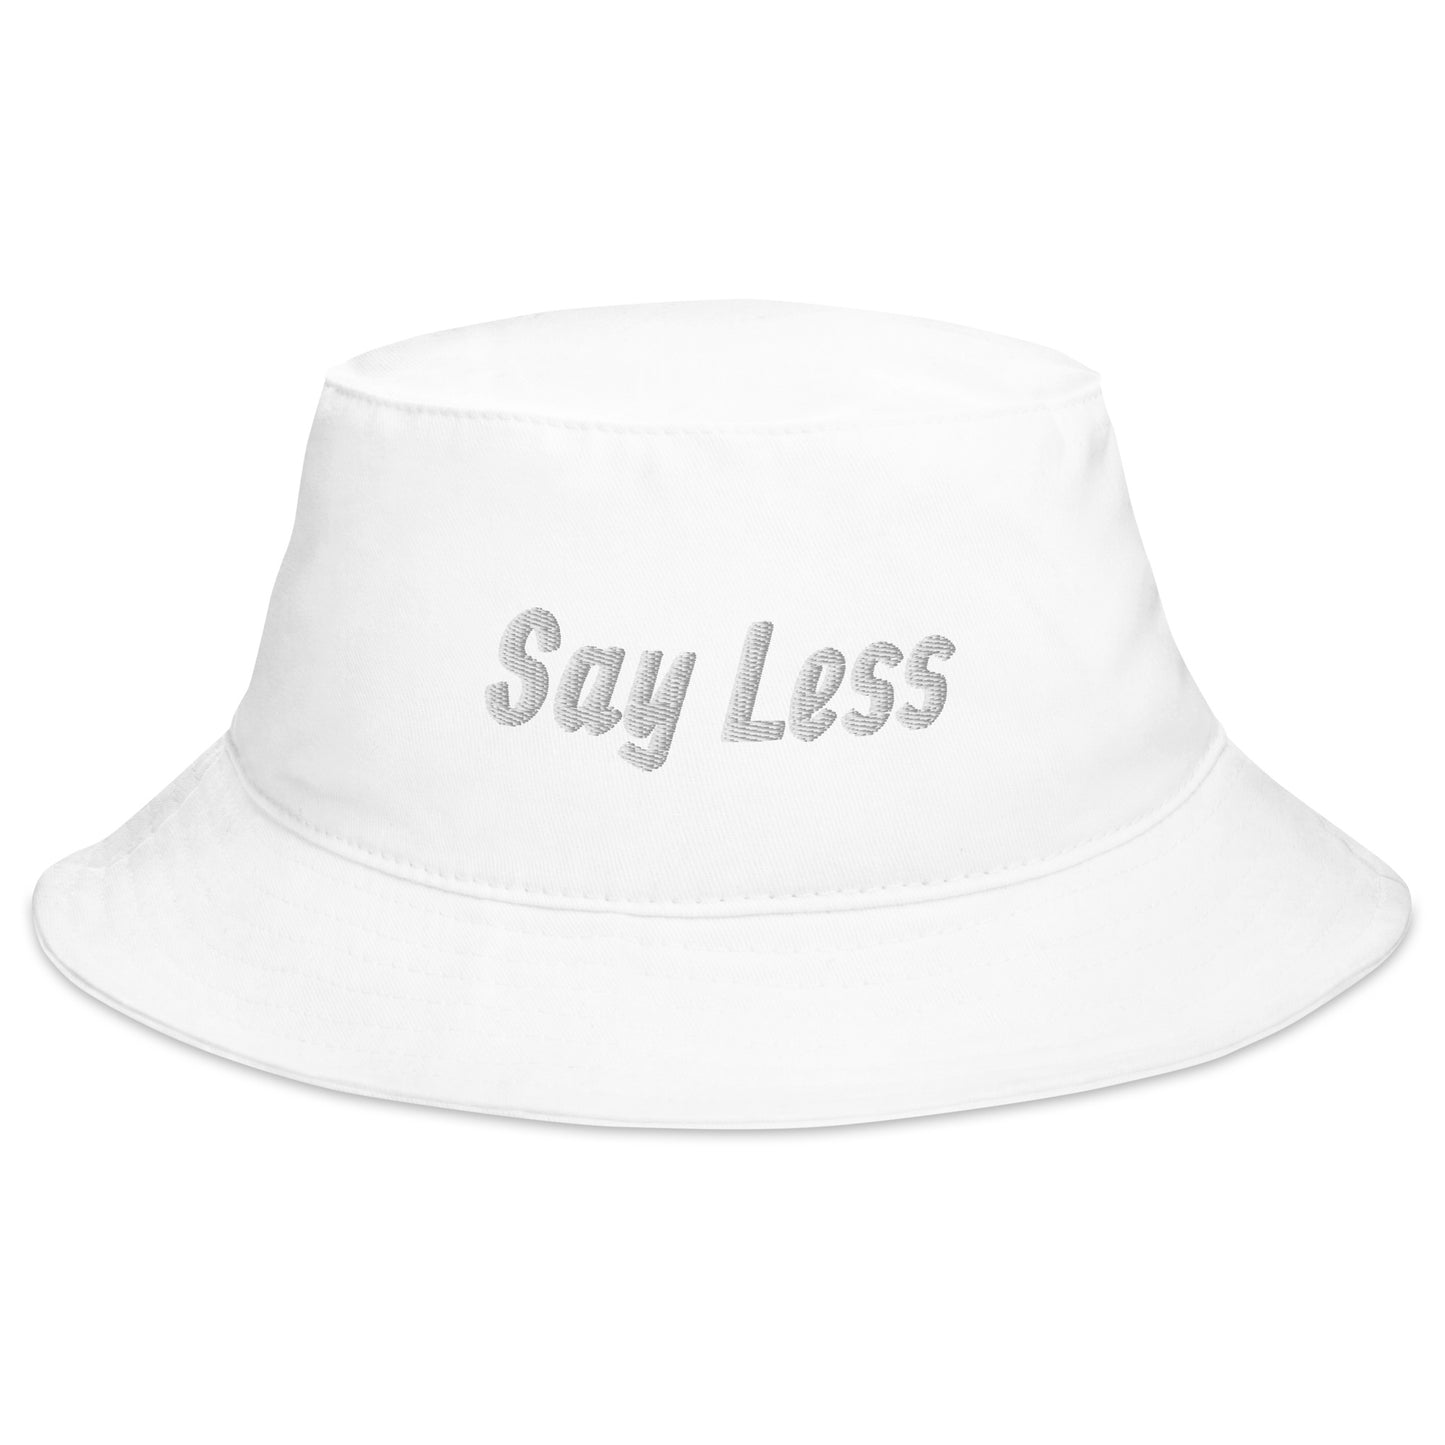 Say Less Bucket Hat